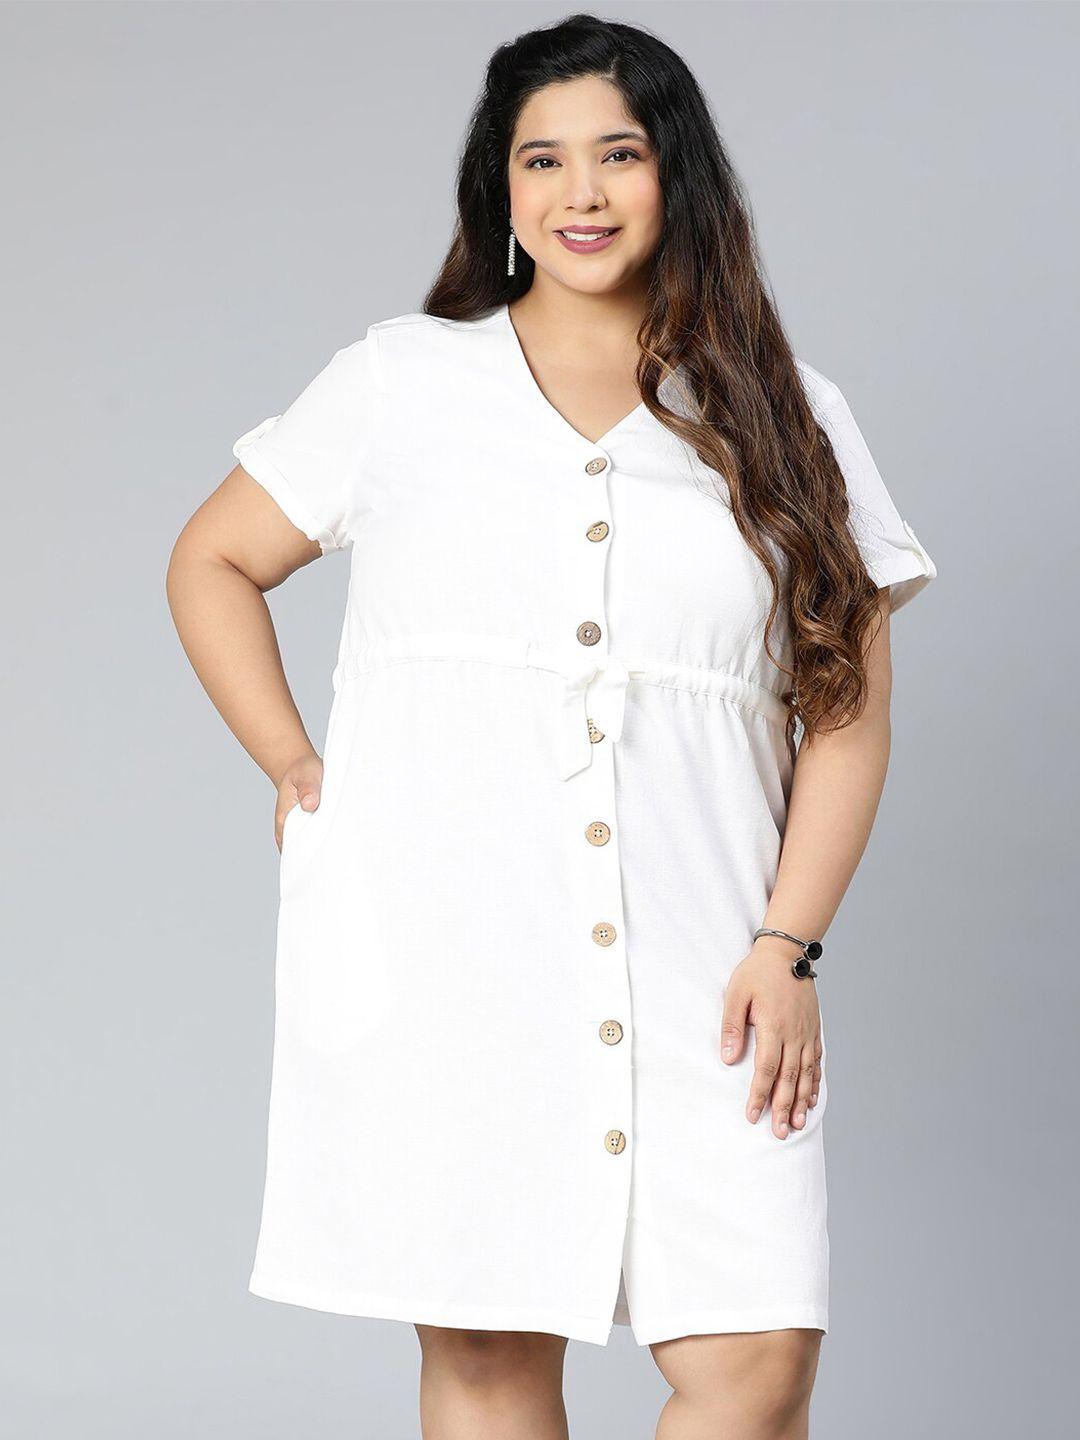 oxolloxo-white-a-line-dress